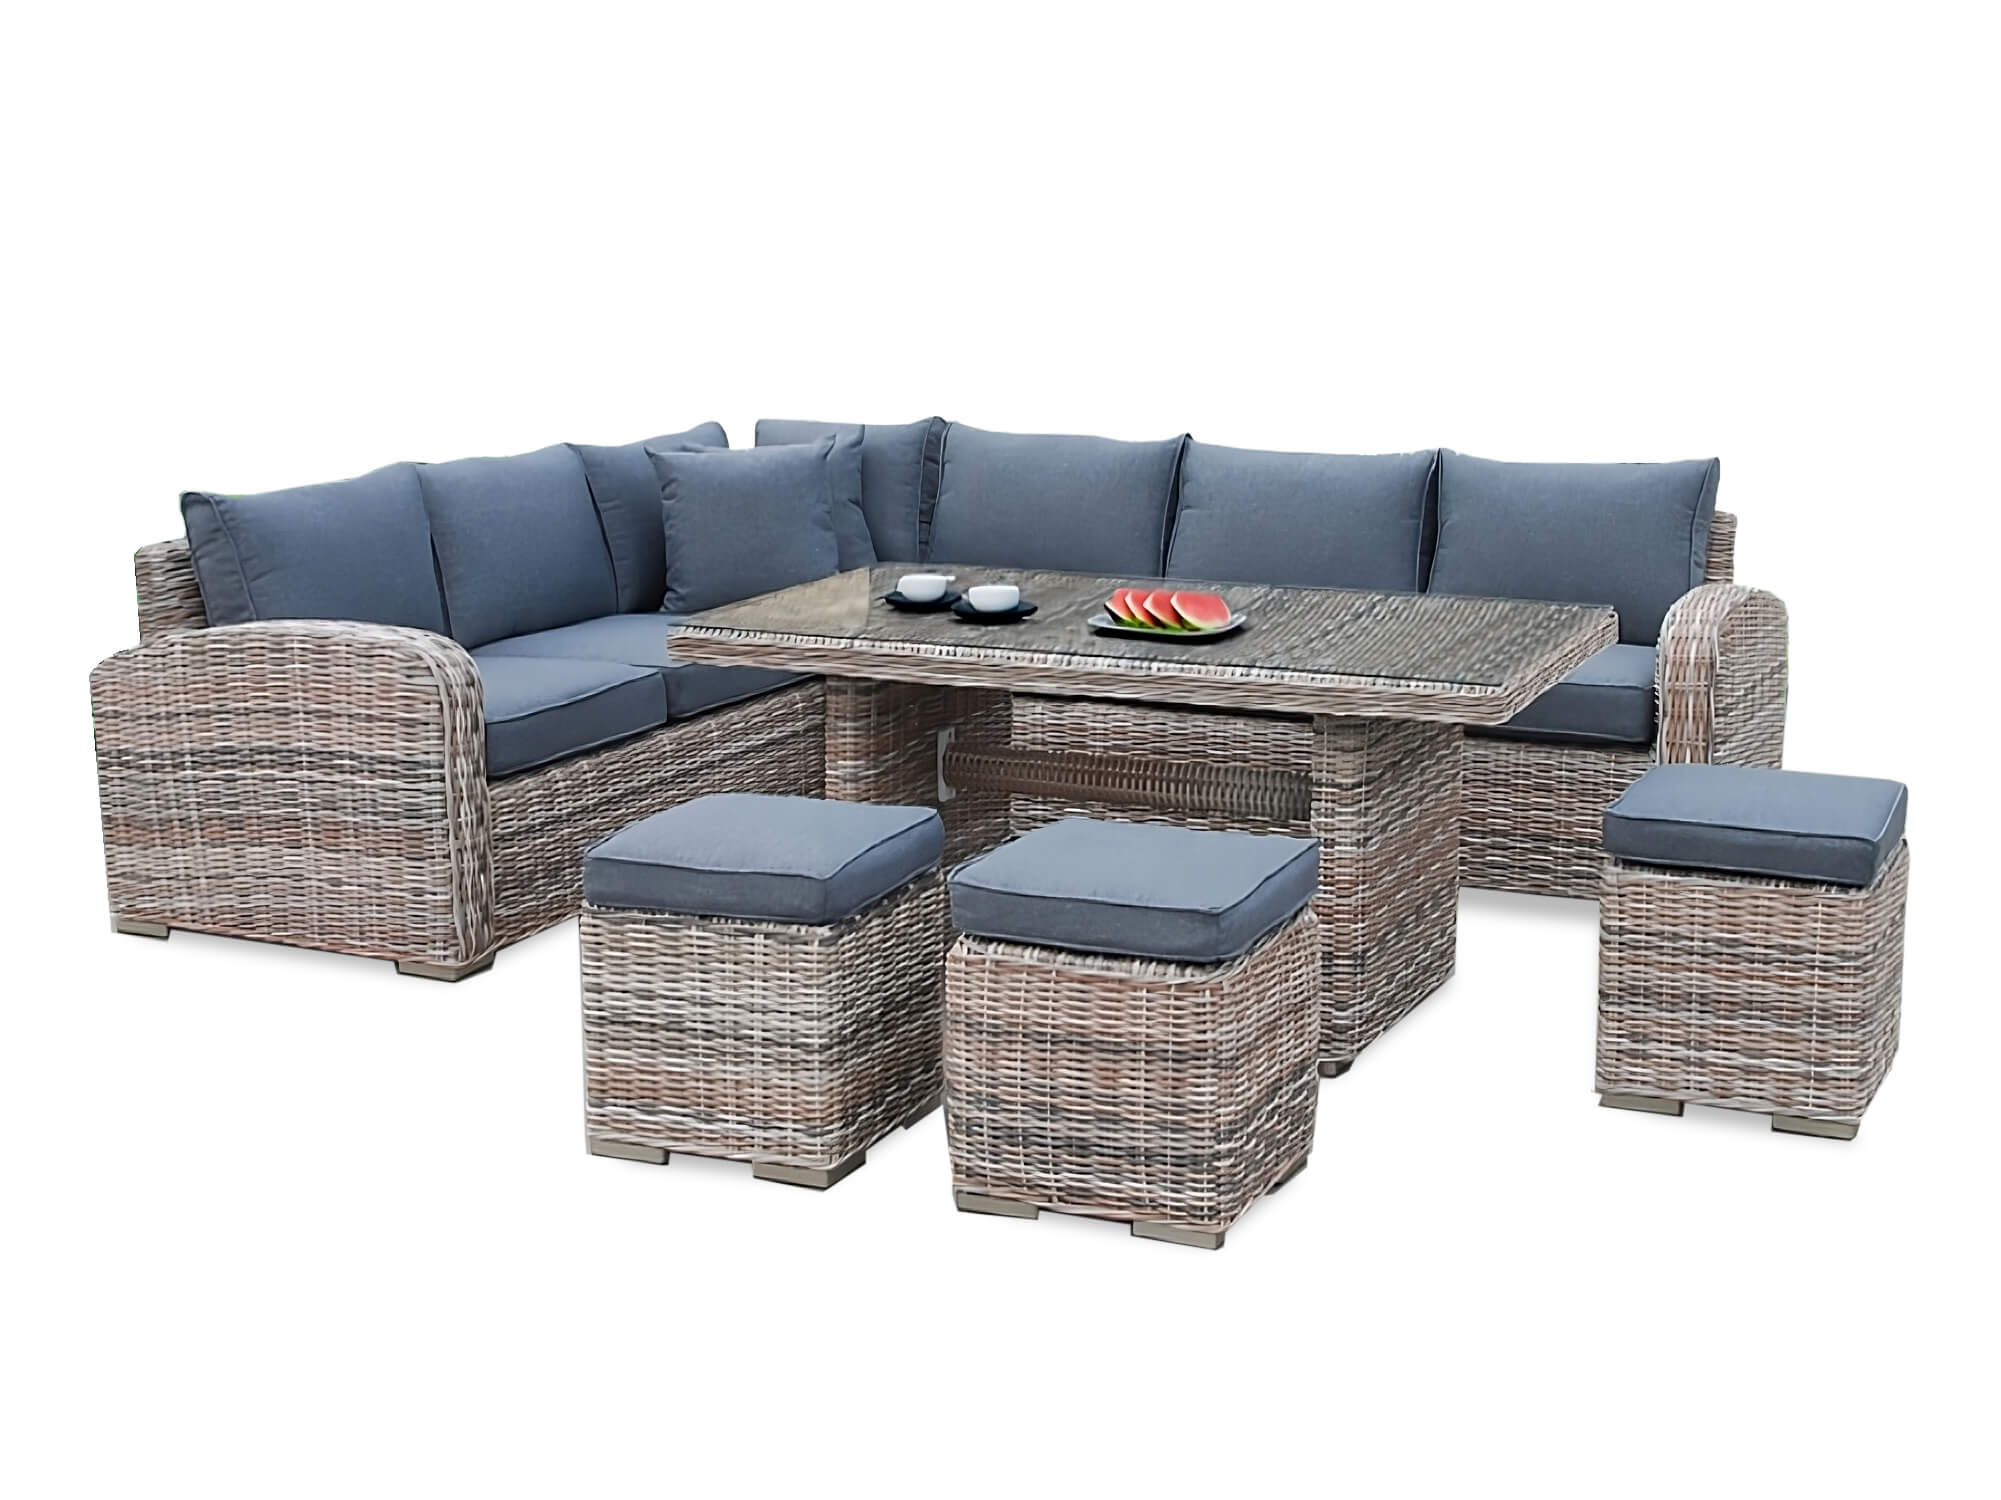 Tilos outdoor dining sitting set - Lux Furniture